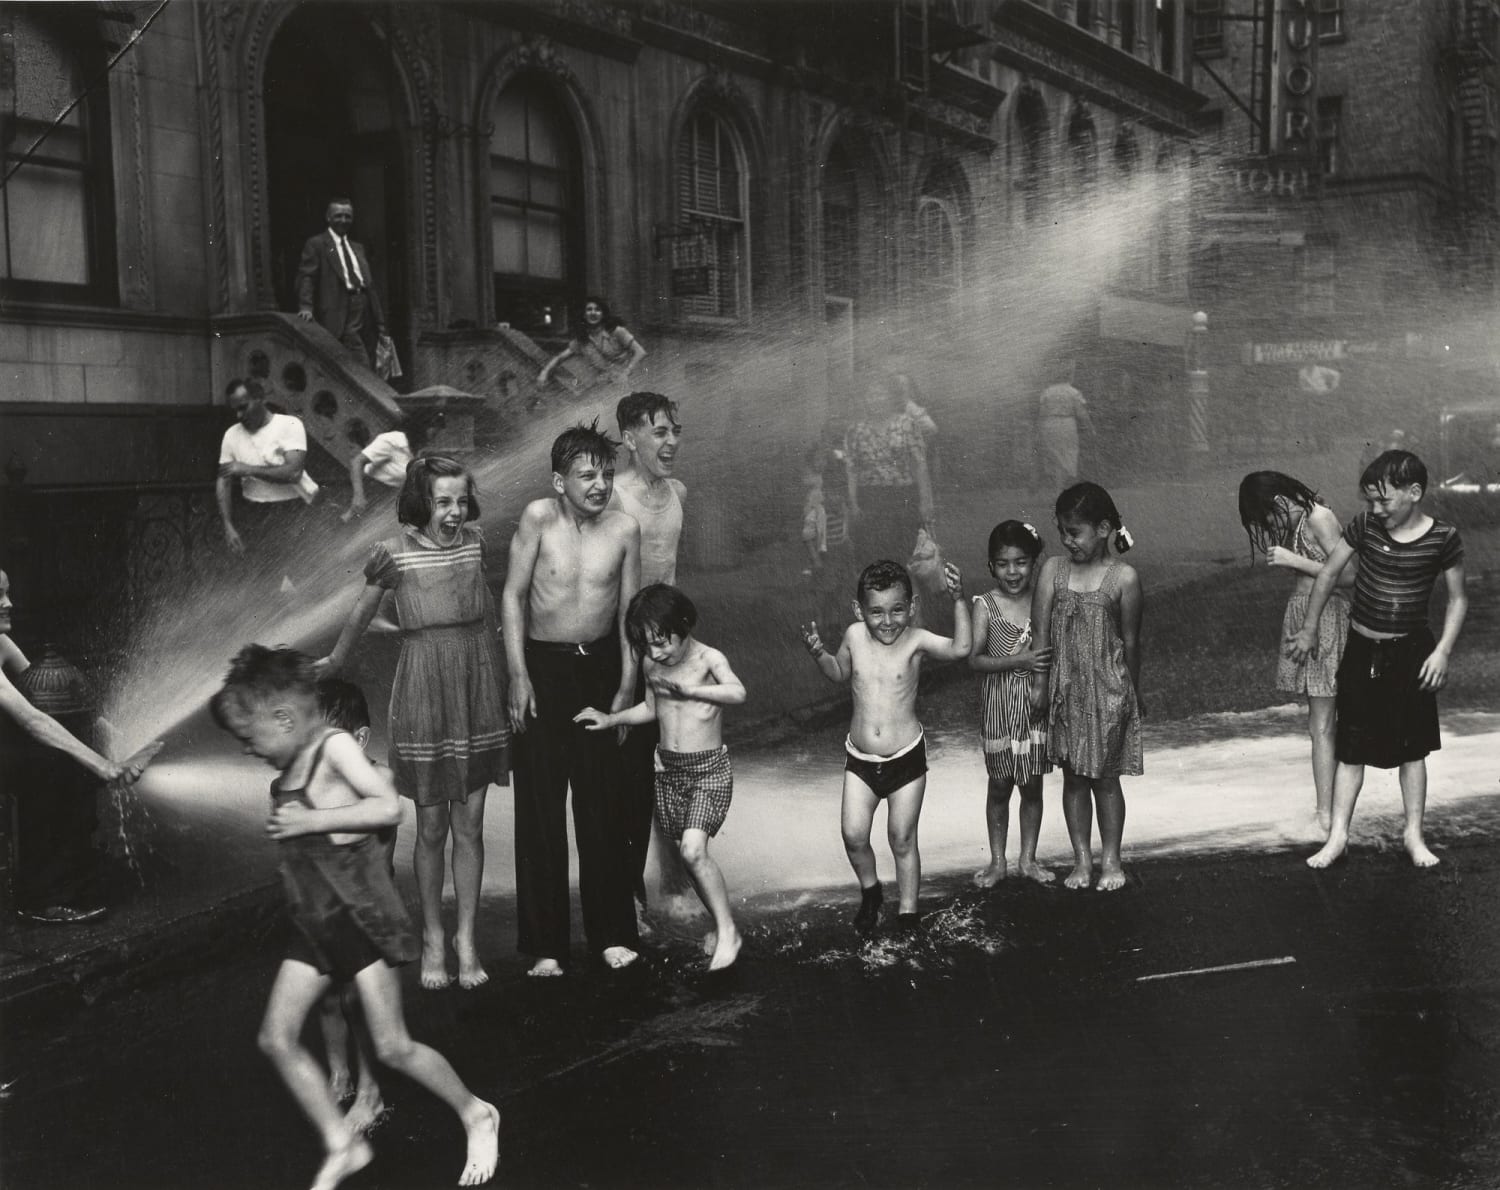 "New York Summer" [c. 1937] by Weegee